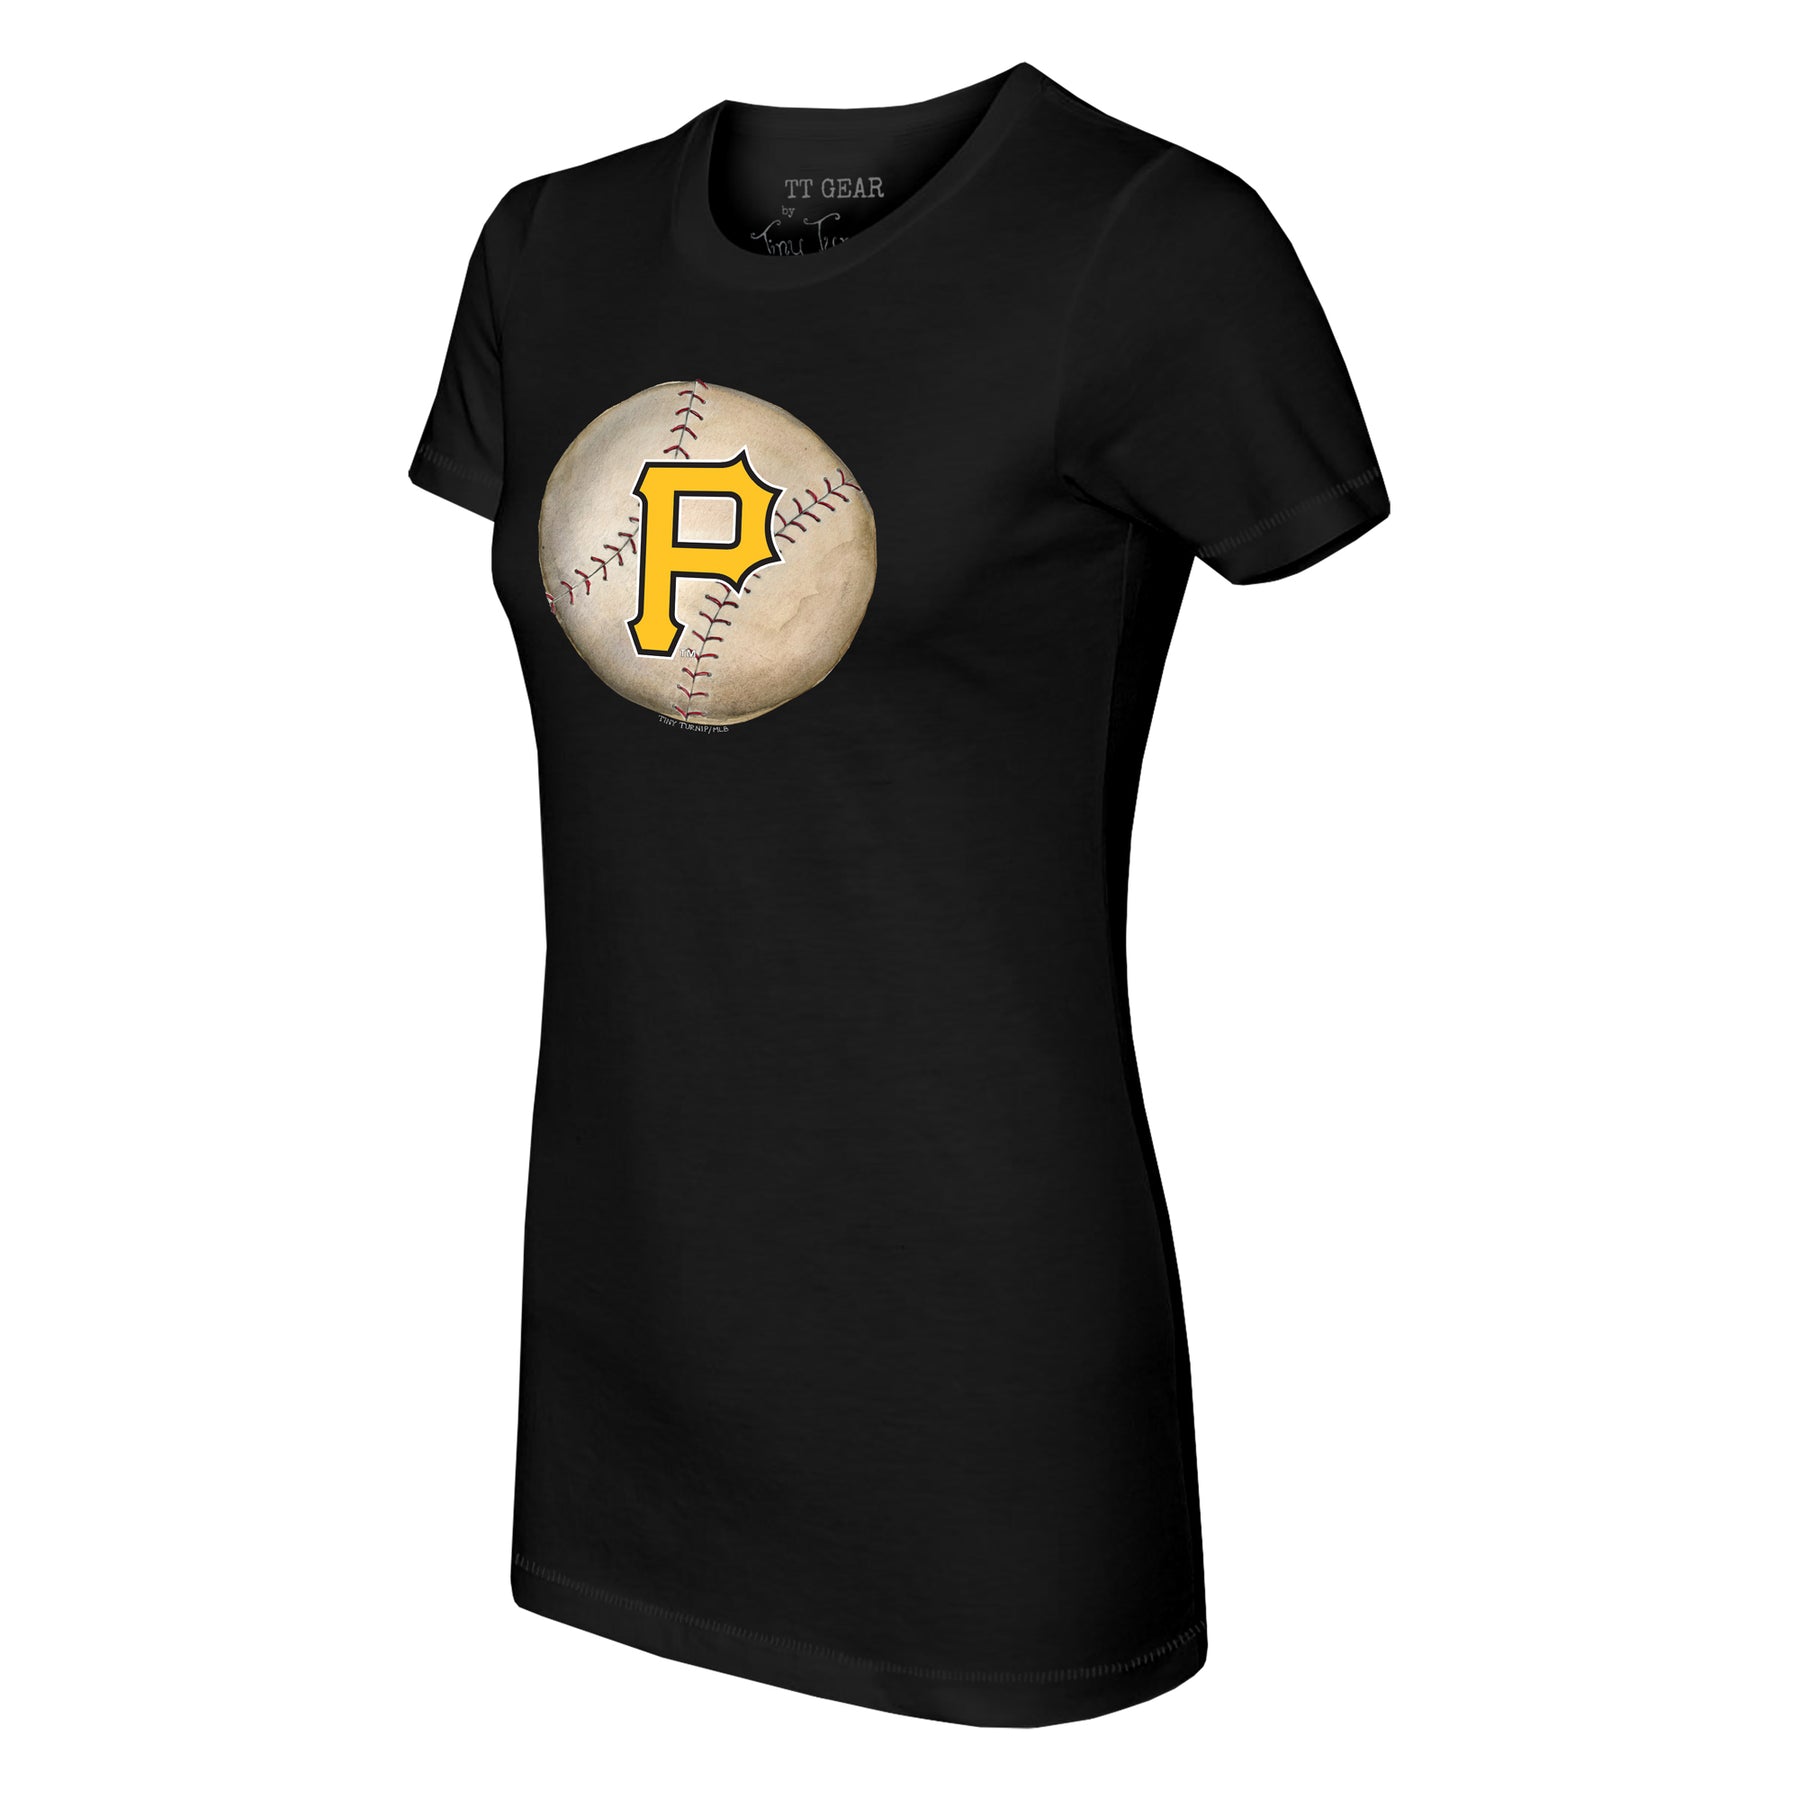 Pittsburgh Pirates T-Shirts, Pirates Tees, Shirts